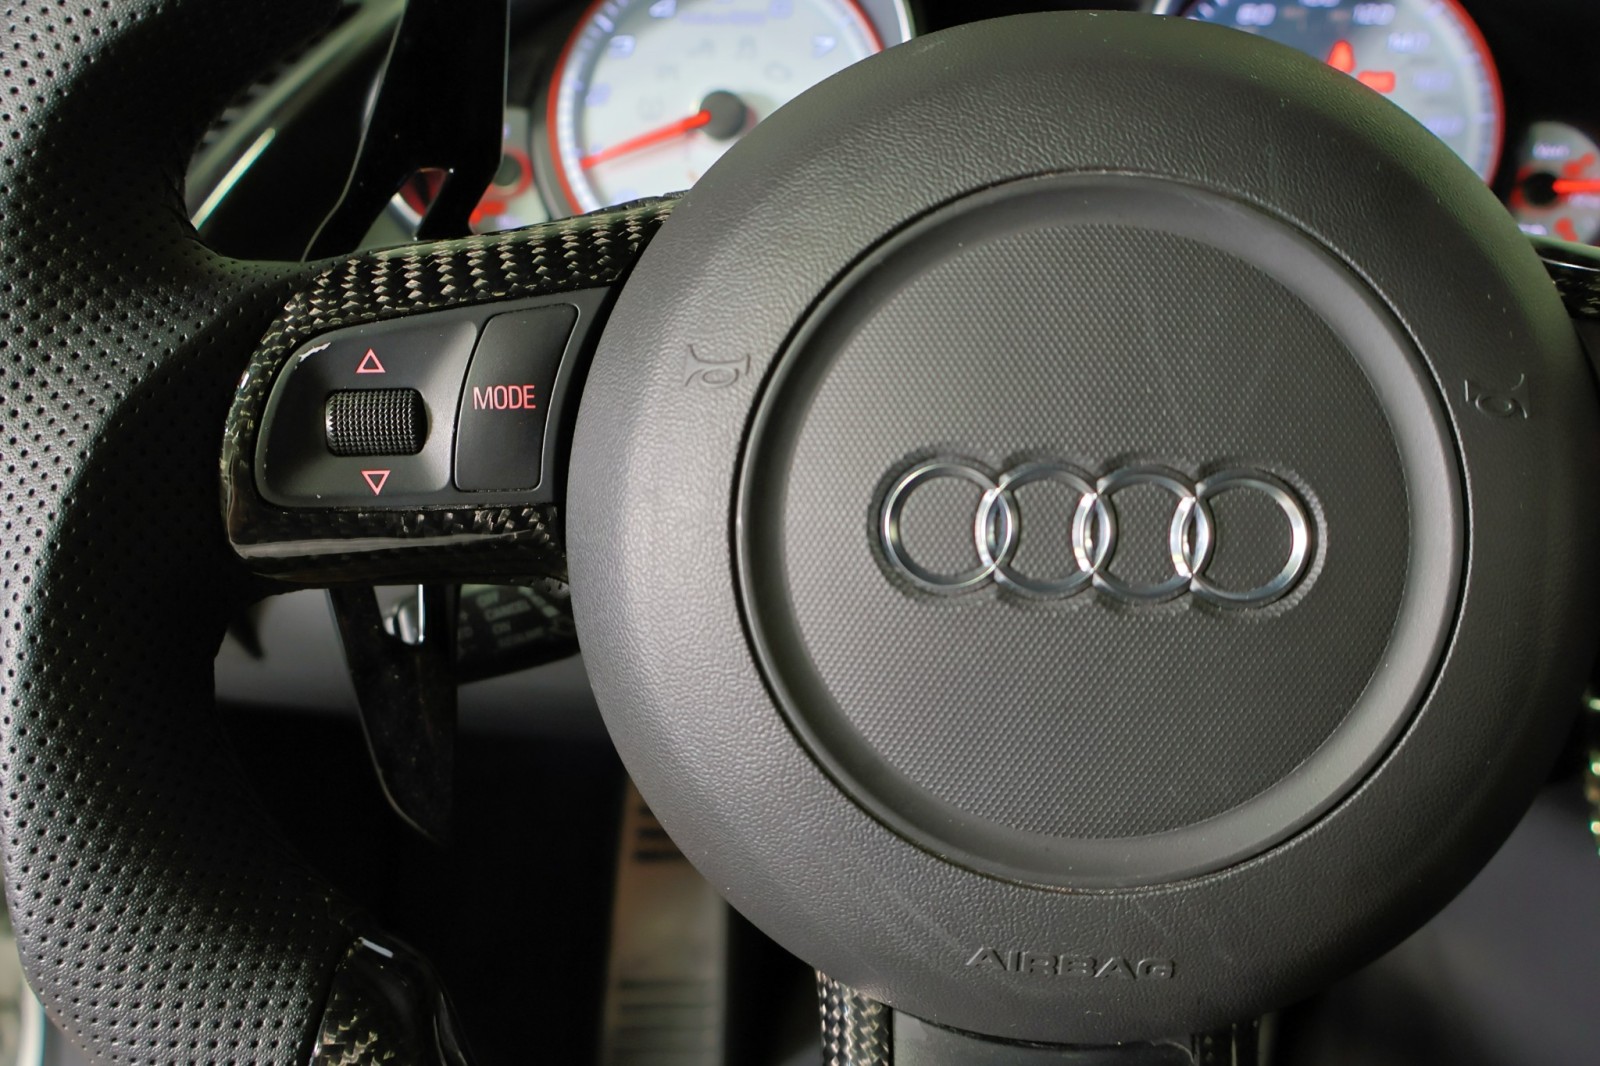 2012 Audi R8 Coupe Auto quattro 5.2L CarbonSideBlades EnhancedL 18